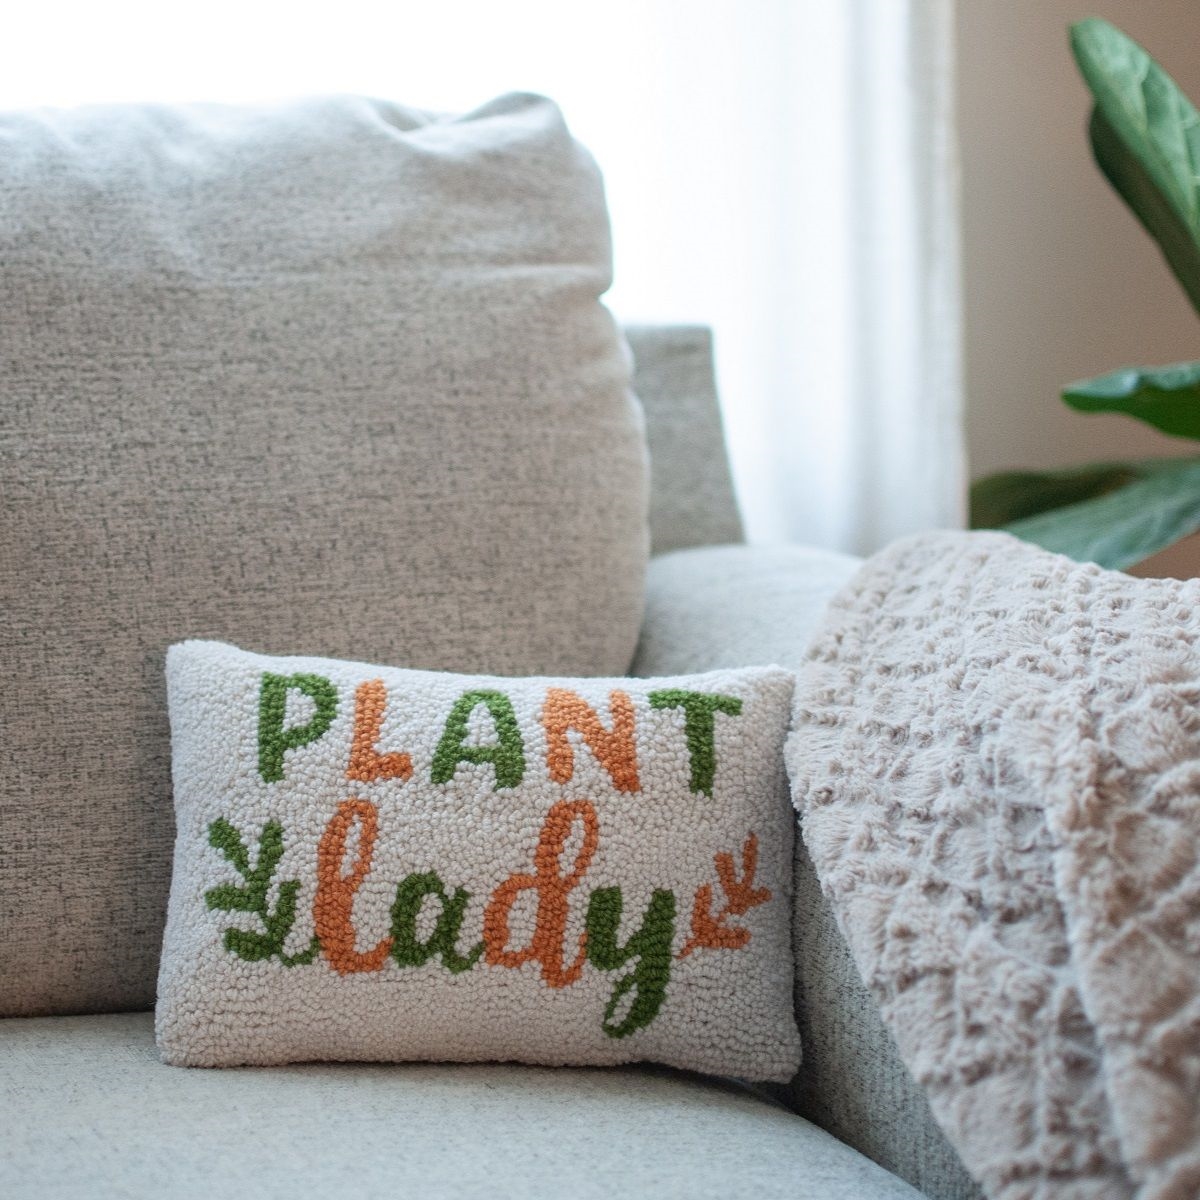 Plant Lady Hook Pillow